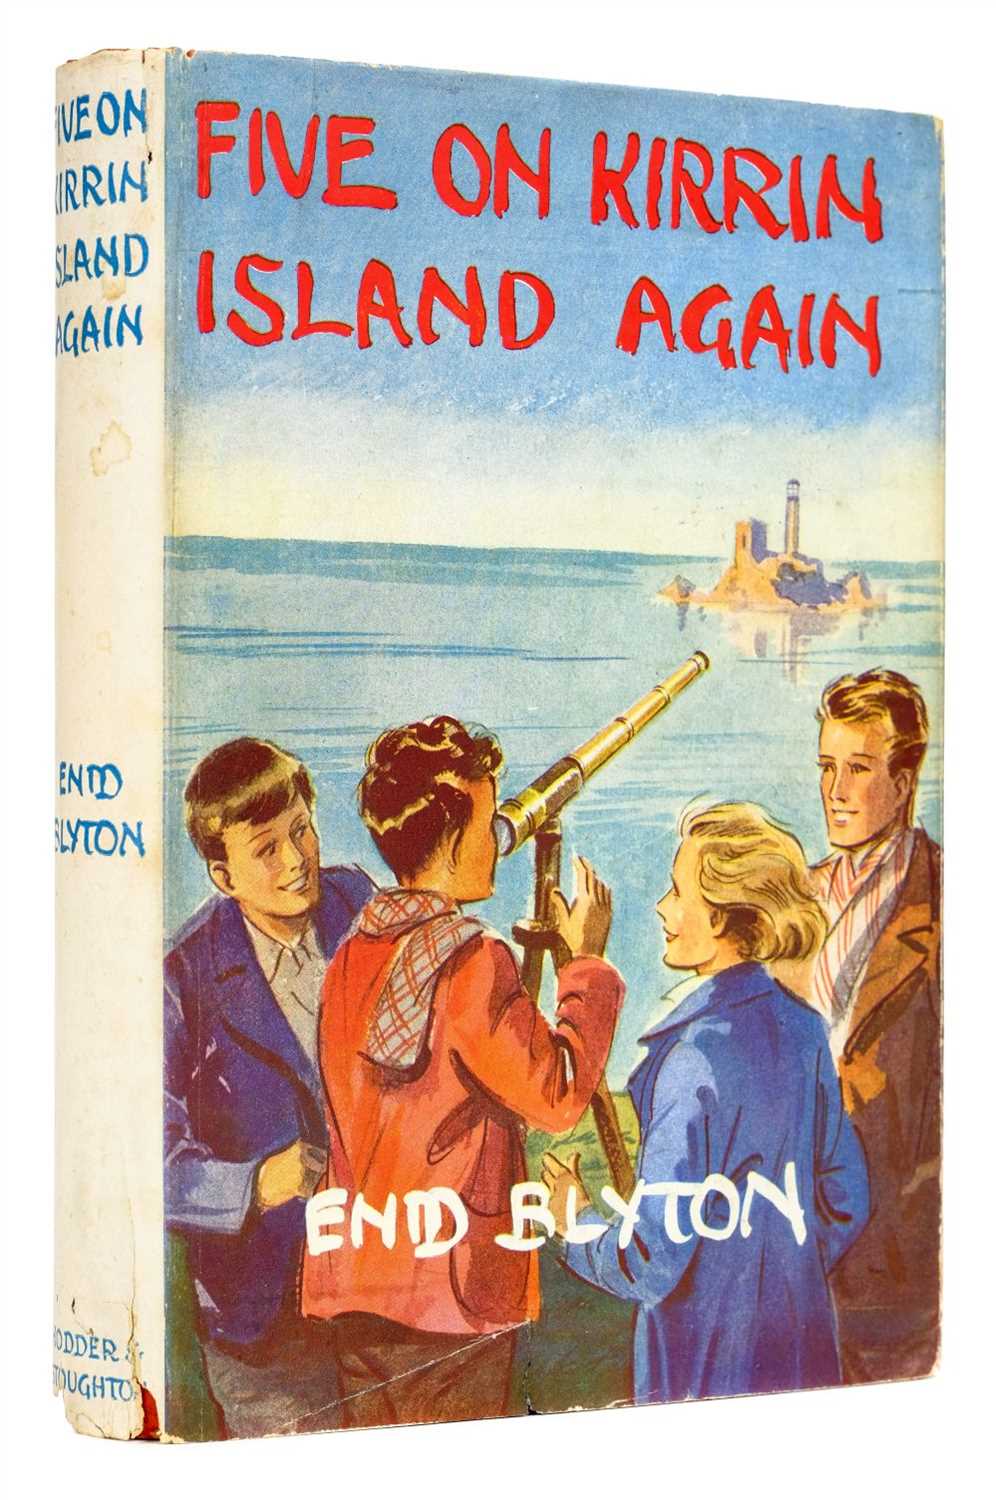 Lot 533 - Blyton (Enid). Five on Kirrin Island Again, first edition, 1947